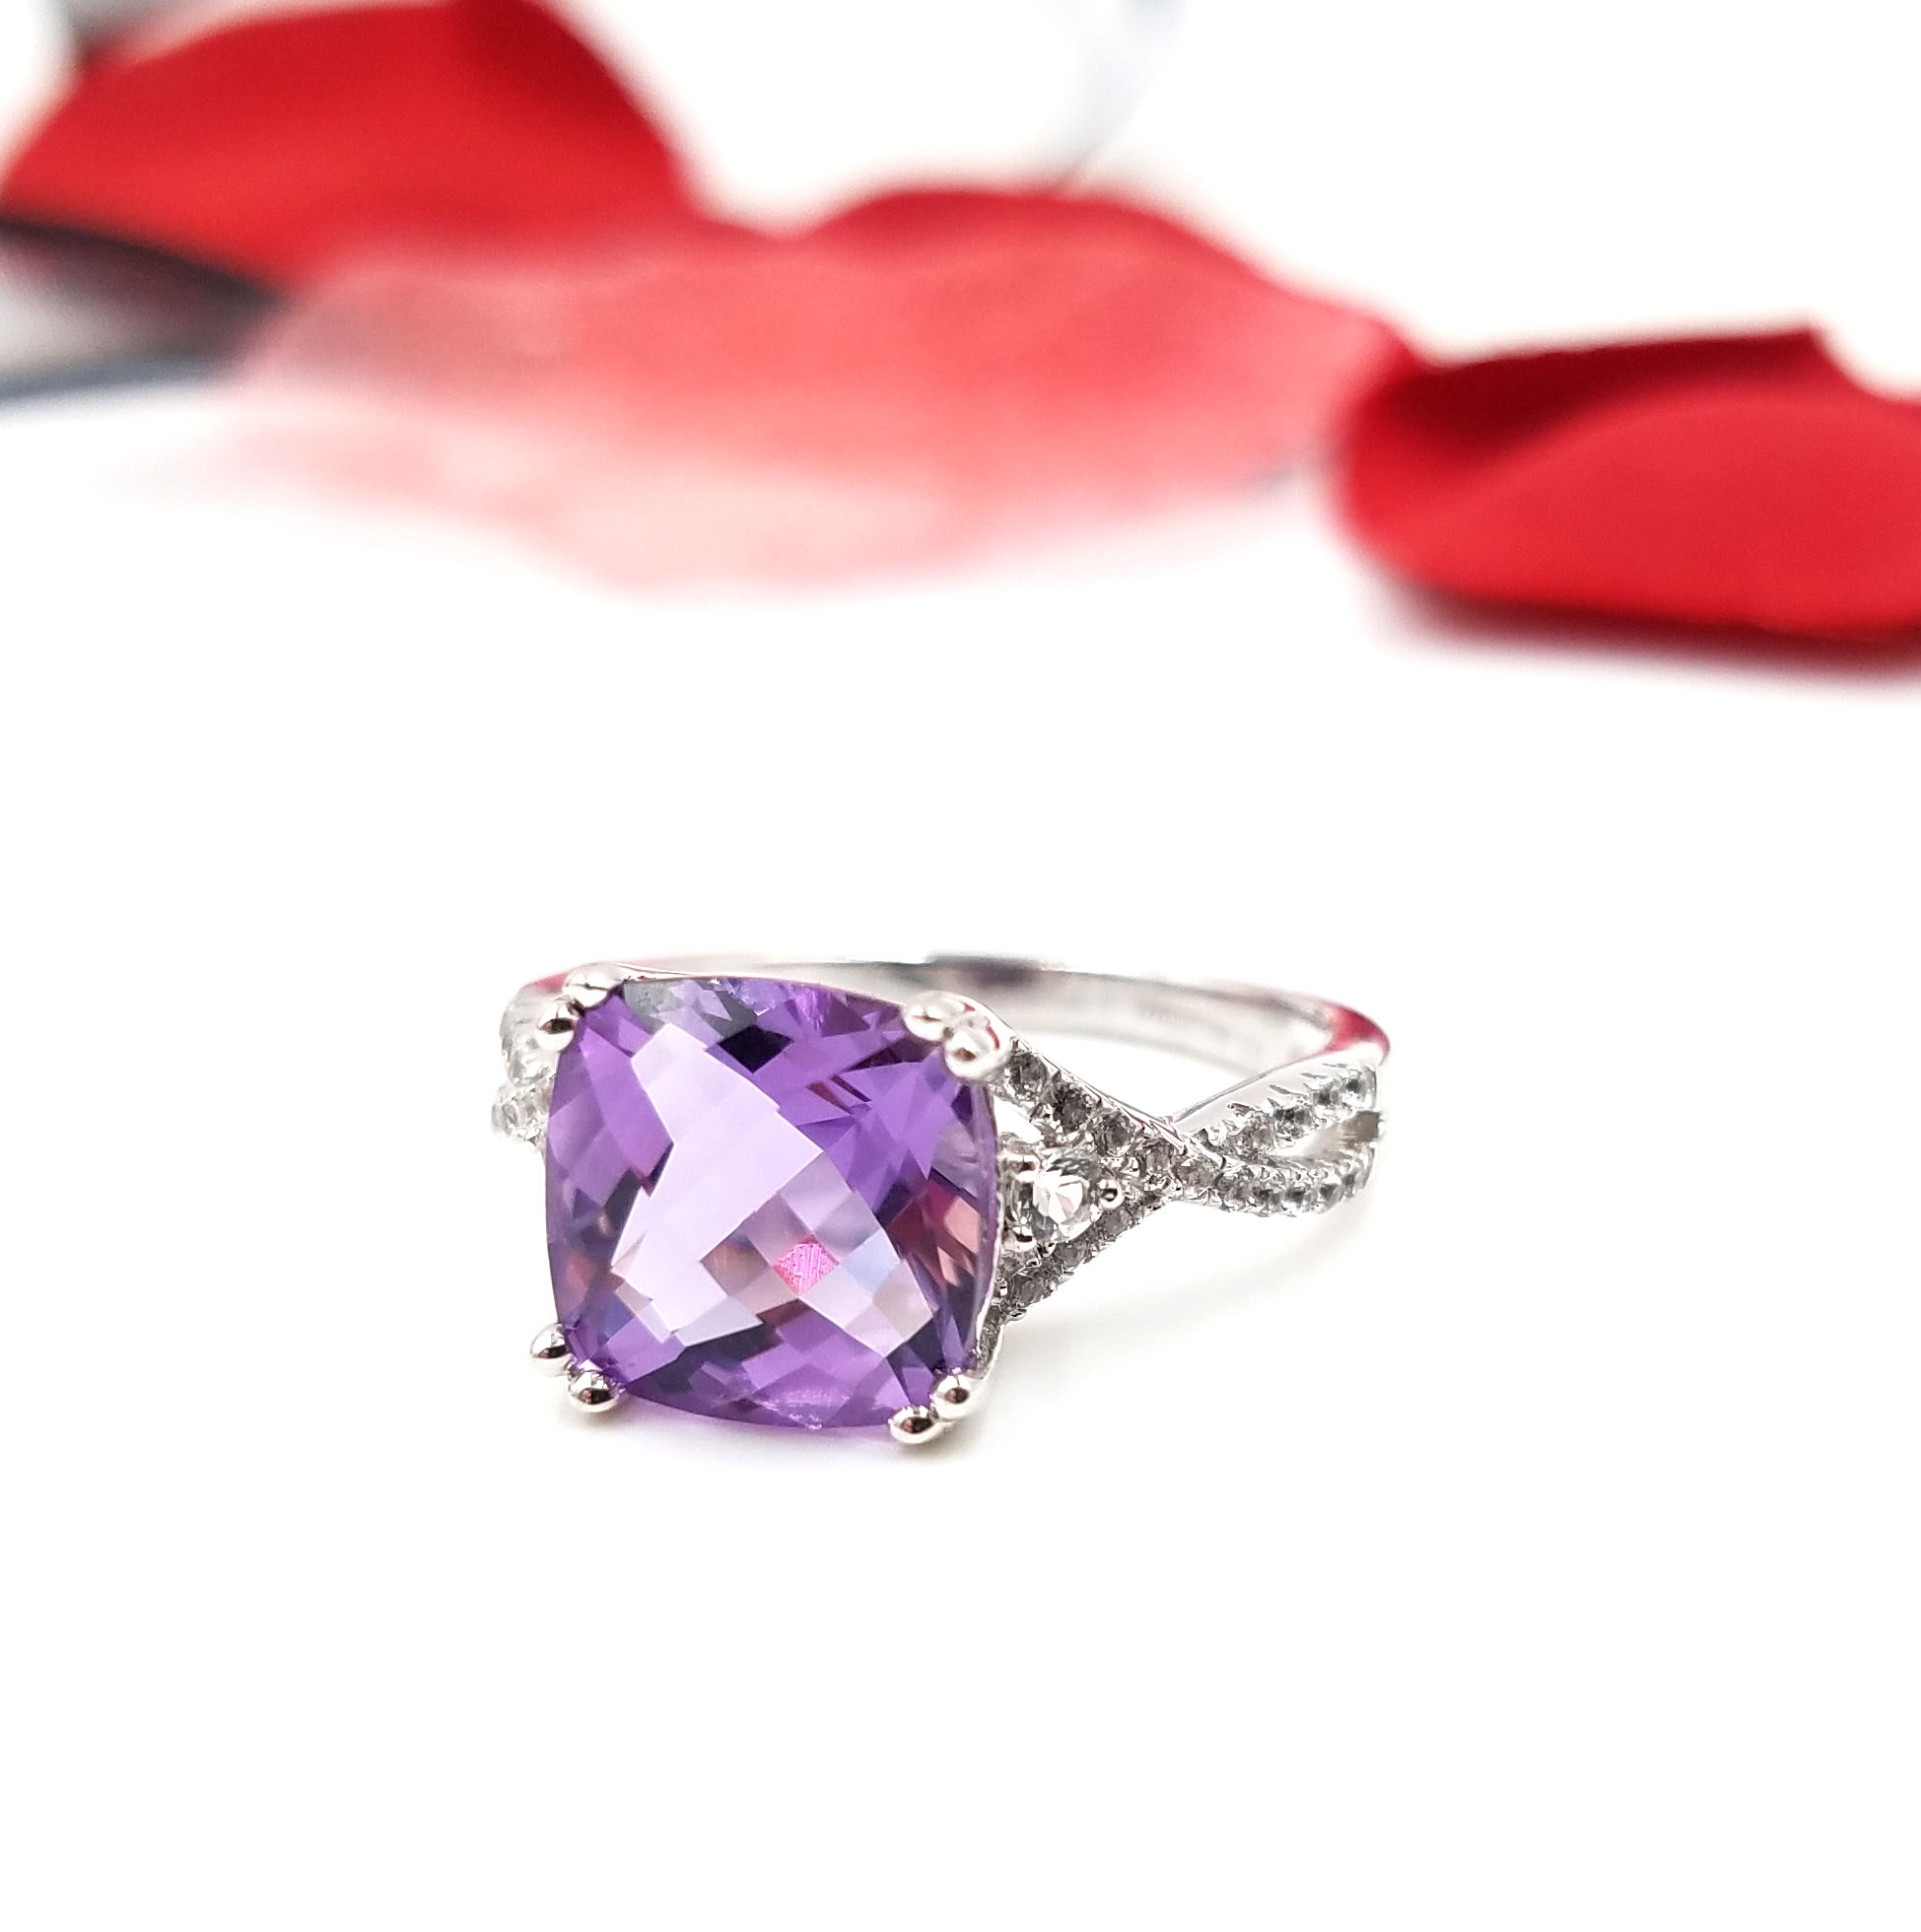 Gemstone Discovery: The Vibrant Amethyst - Princess Jewelry